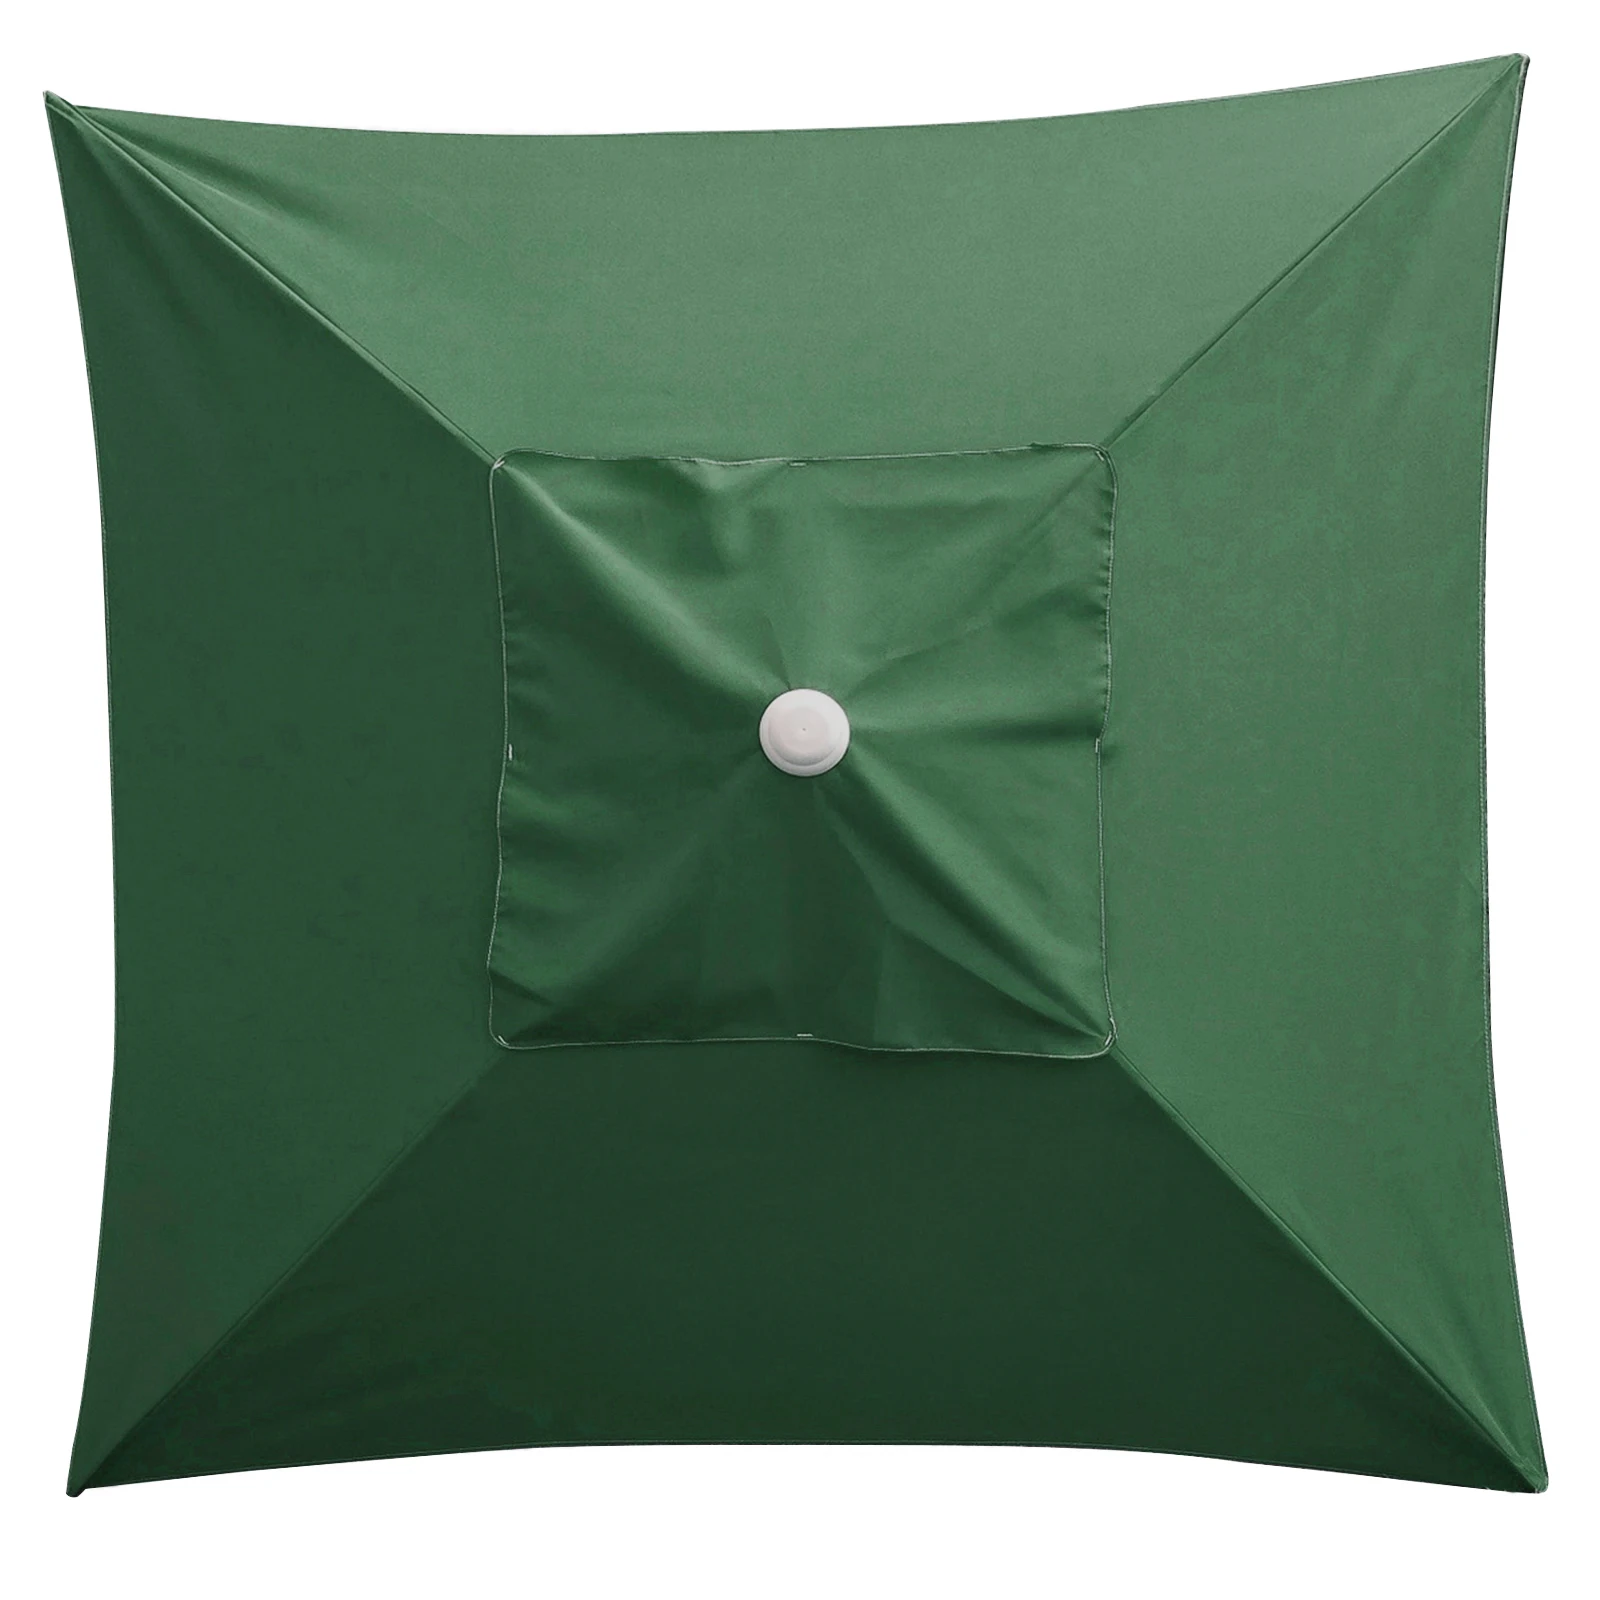 

Square Patio Umbrella Polyester Parasol Canopy 2x2m Sunshade Garden Umbrella Home Accessories Anti-UV Outdoor Umbrella Cover